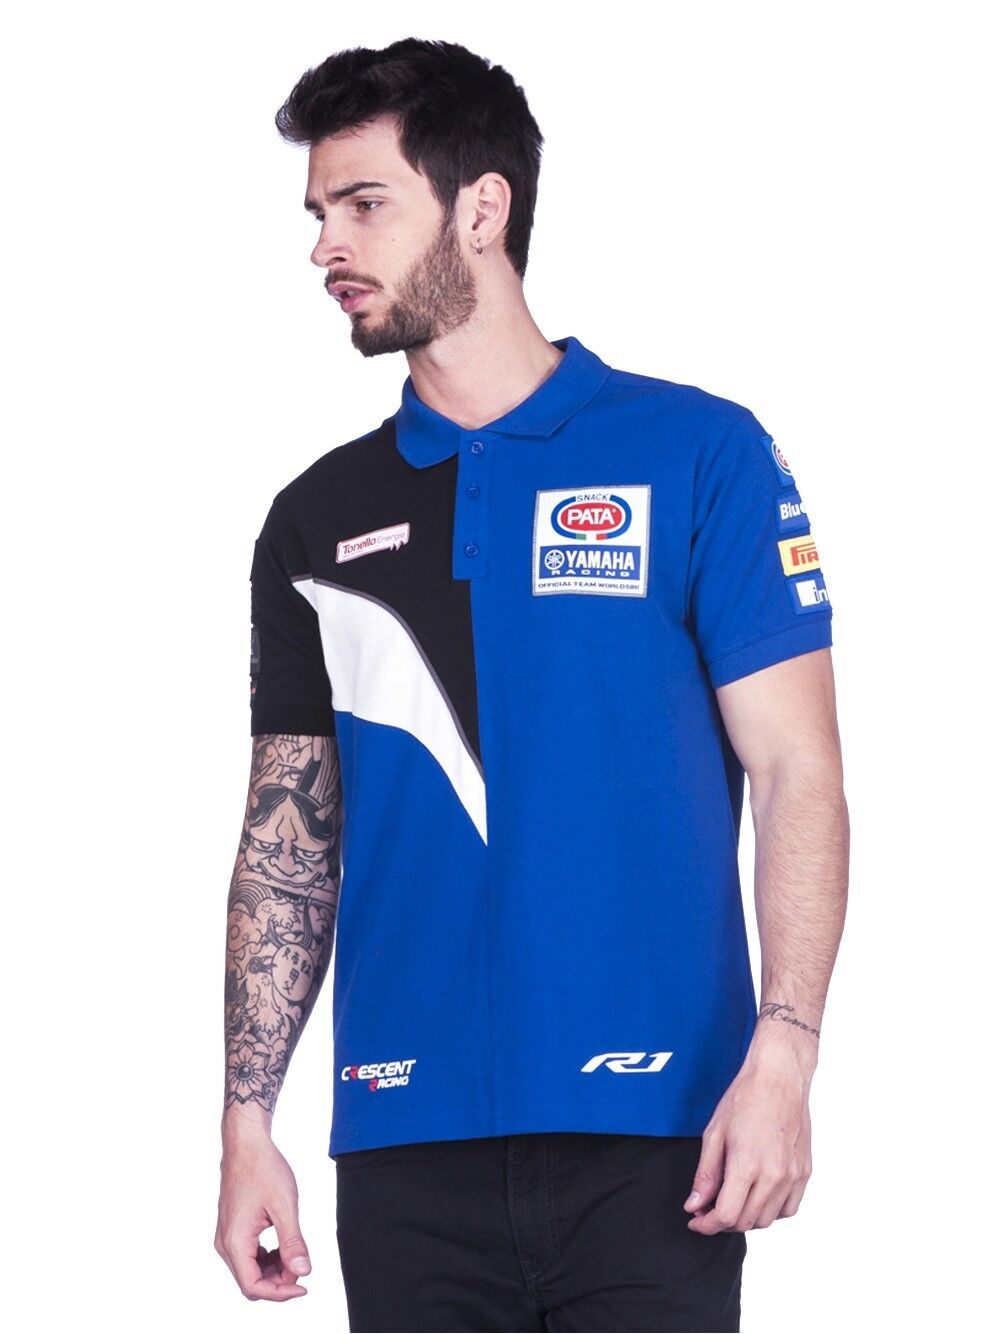 Official Crescent Yamaha Pata Racing Team Polo Shirt - 17 17016